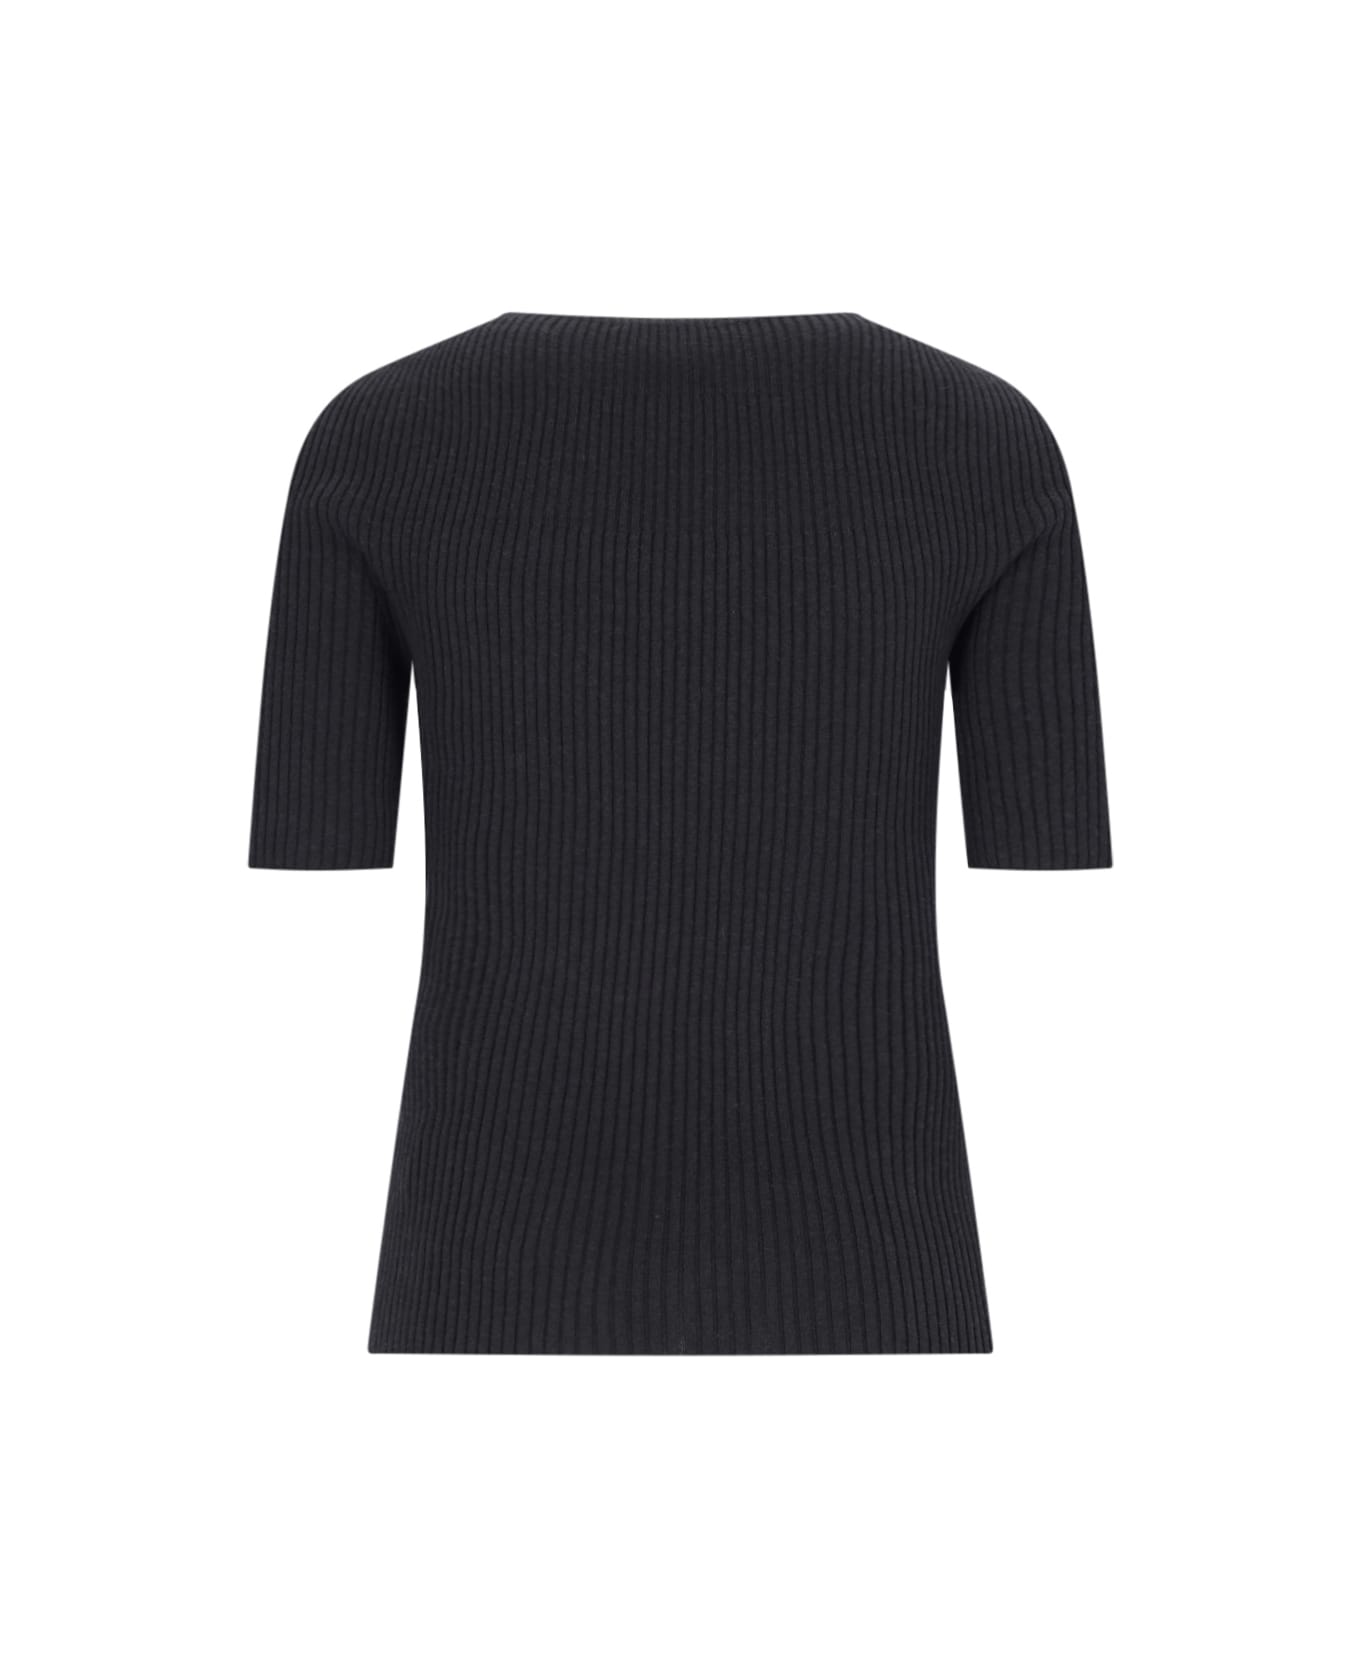 Courrèges 'solar Light' Logo Sweater - Black  